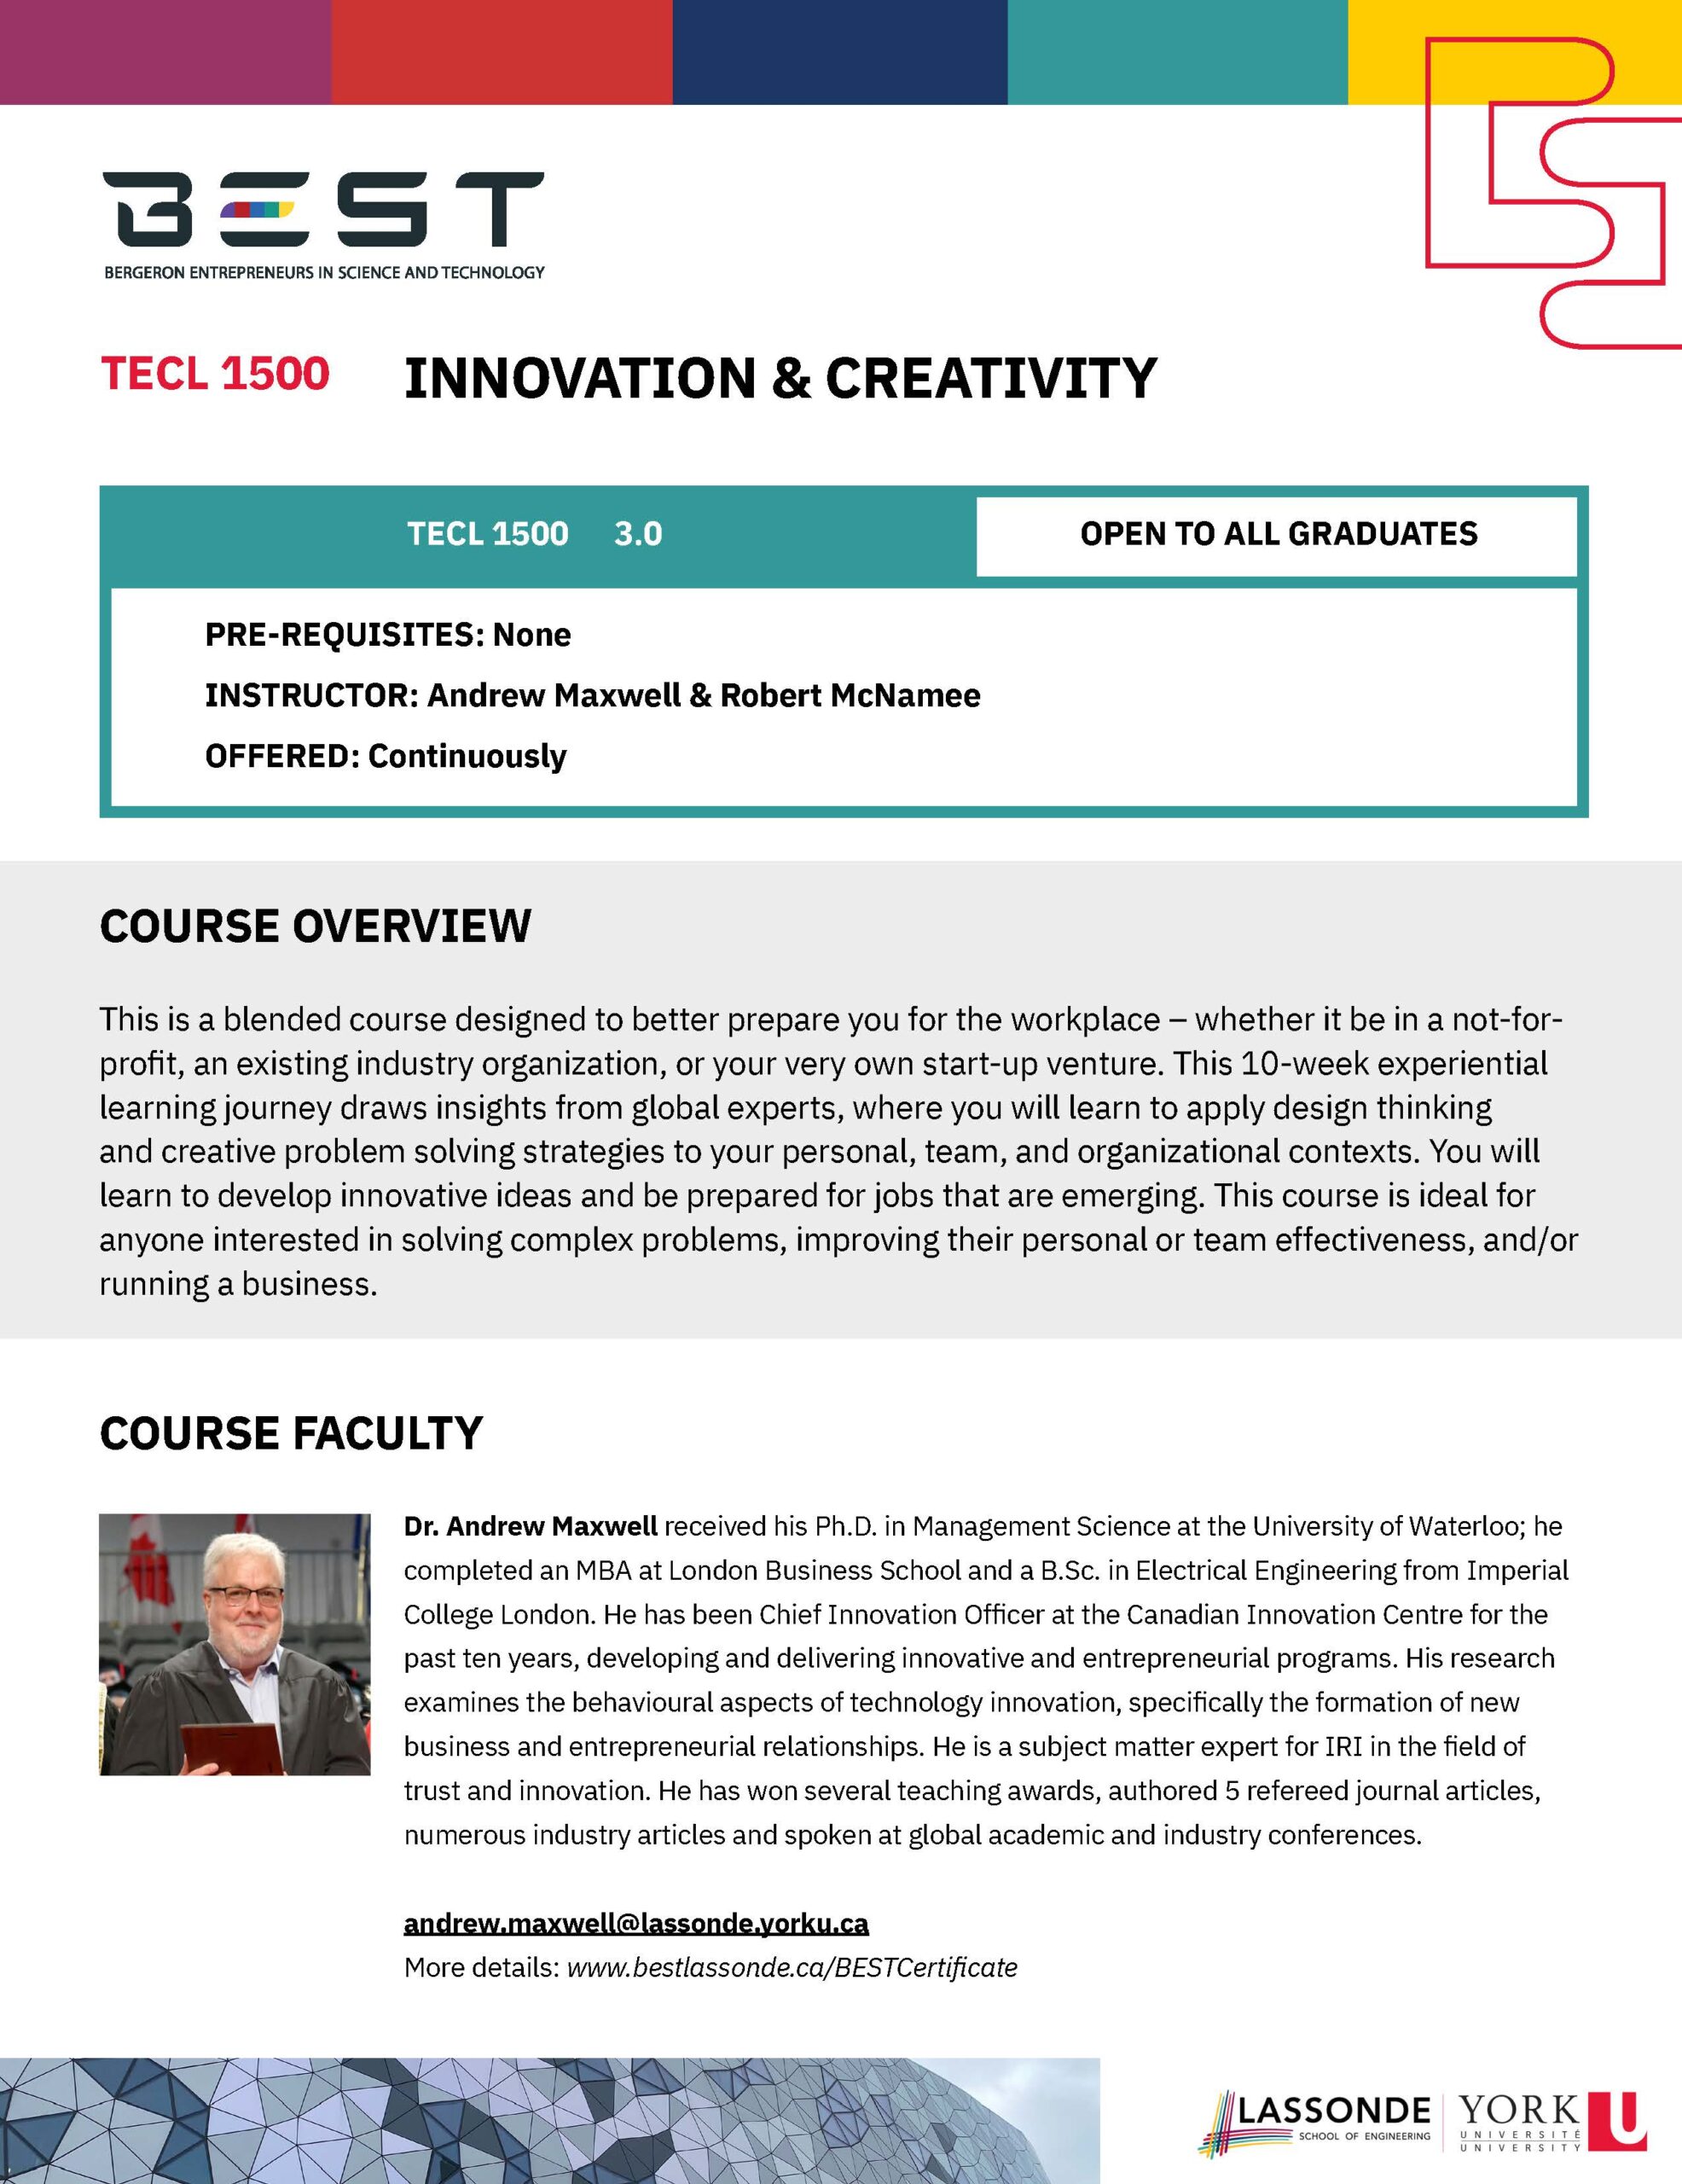 TECL 1500
Innovation & Creativity (poster)